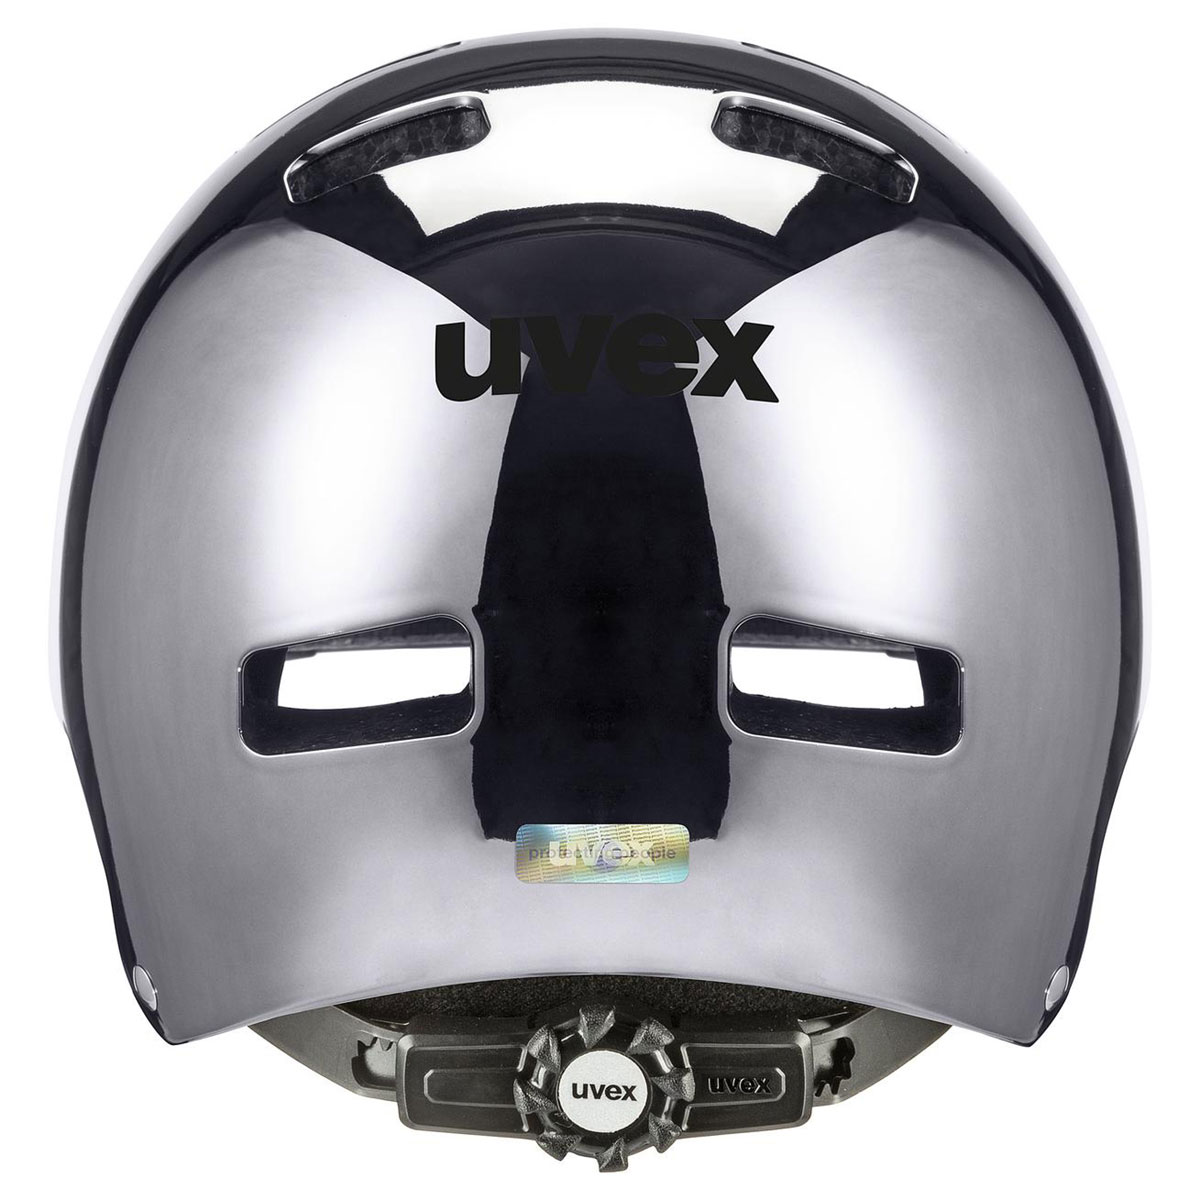 UVEX Hlmt 5 Bike Pro Gunmetal Chrome (s4109880200)